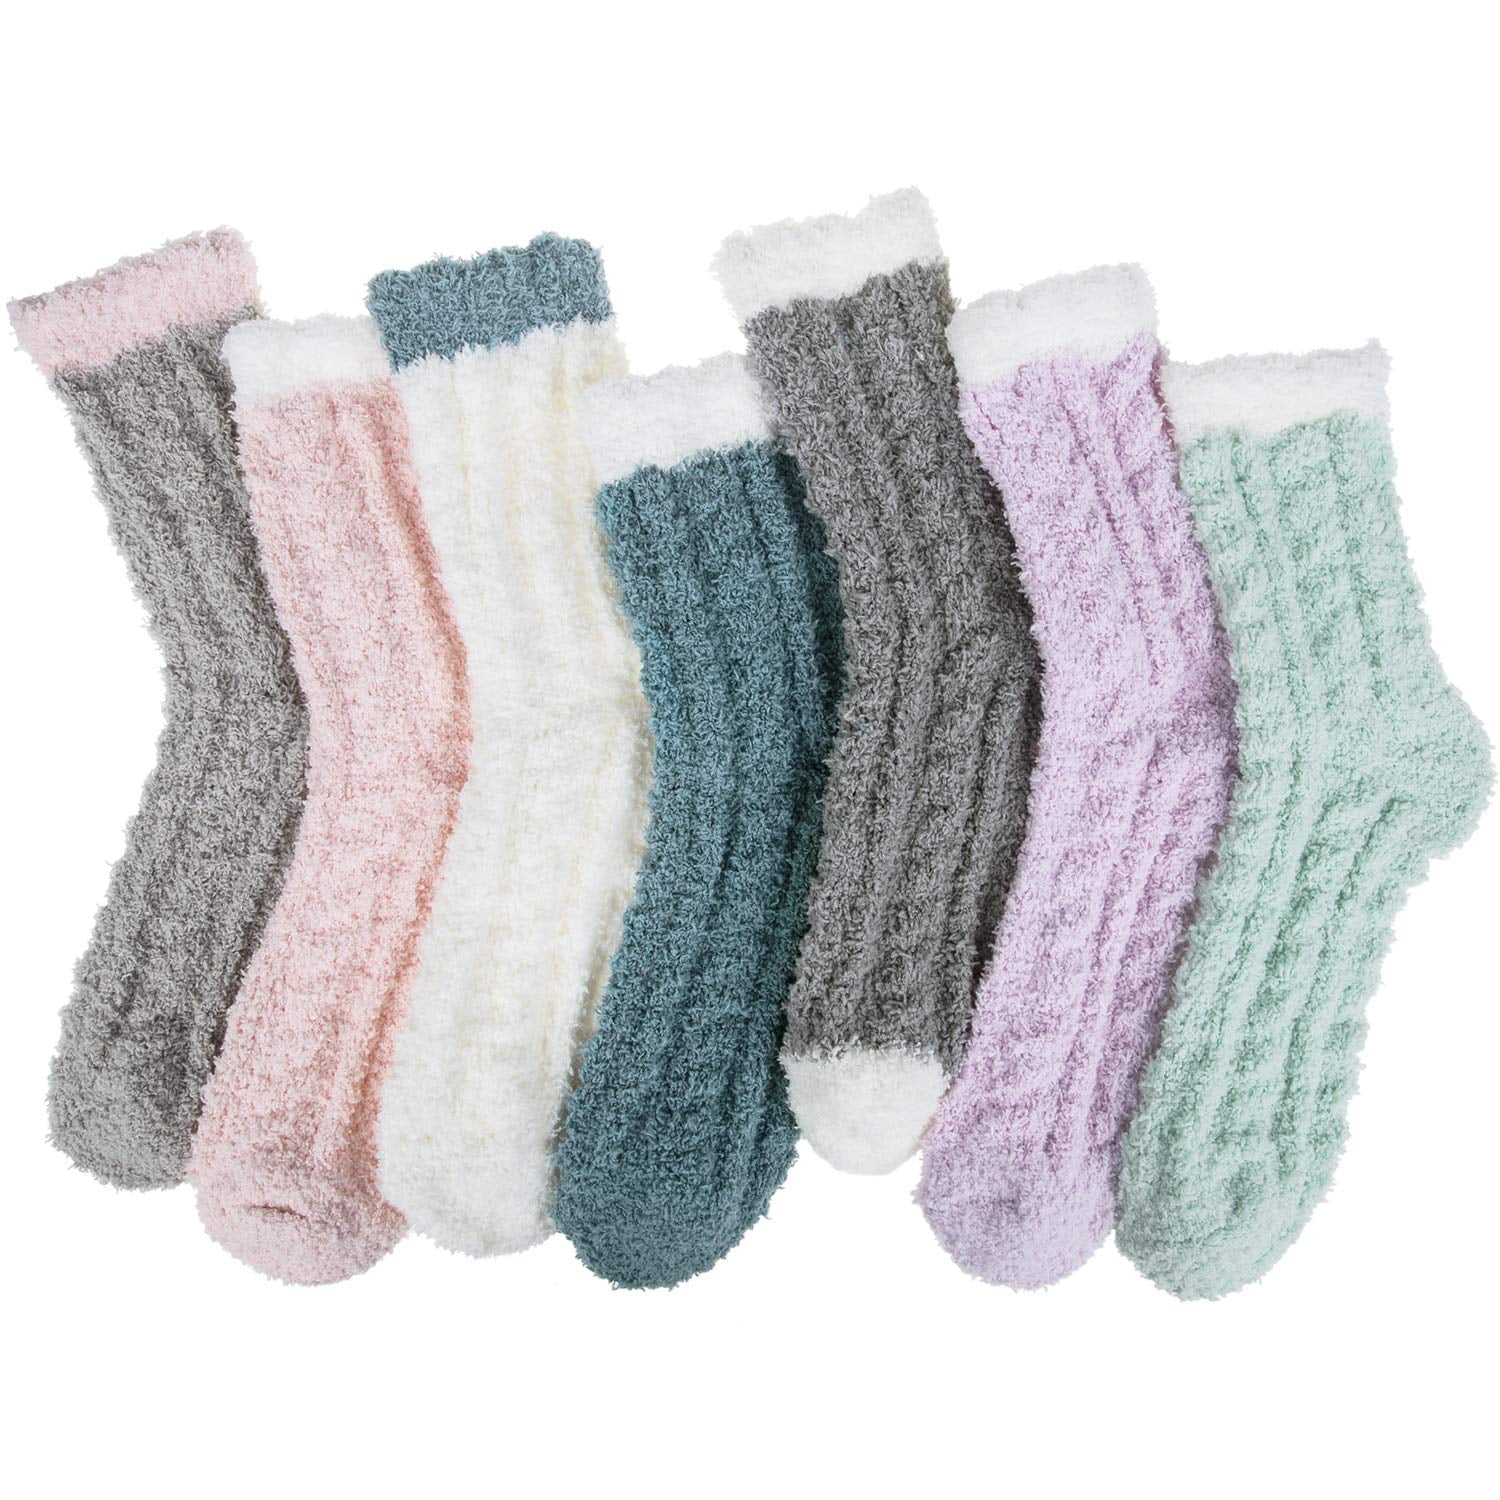 Loritta 7 Pairs Womens Fuzzy Socks Soft Winter Warm Cozy Fluffy Soft ...